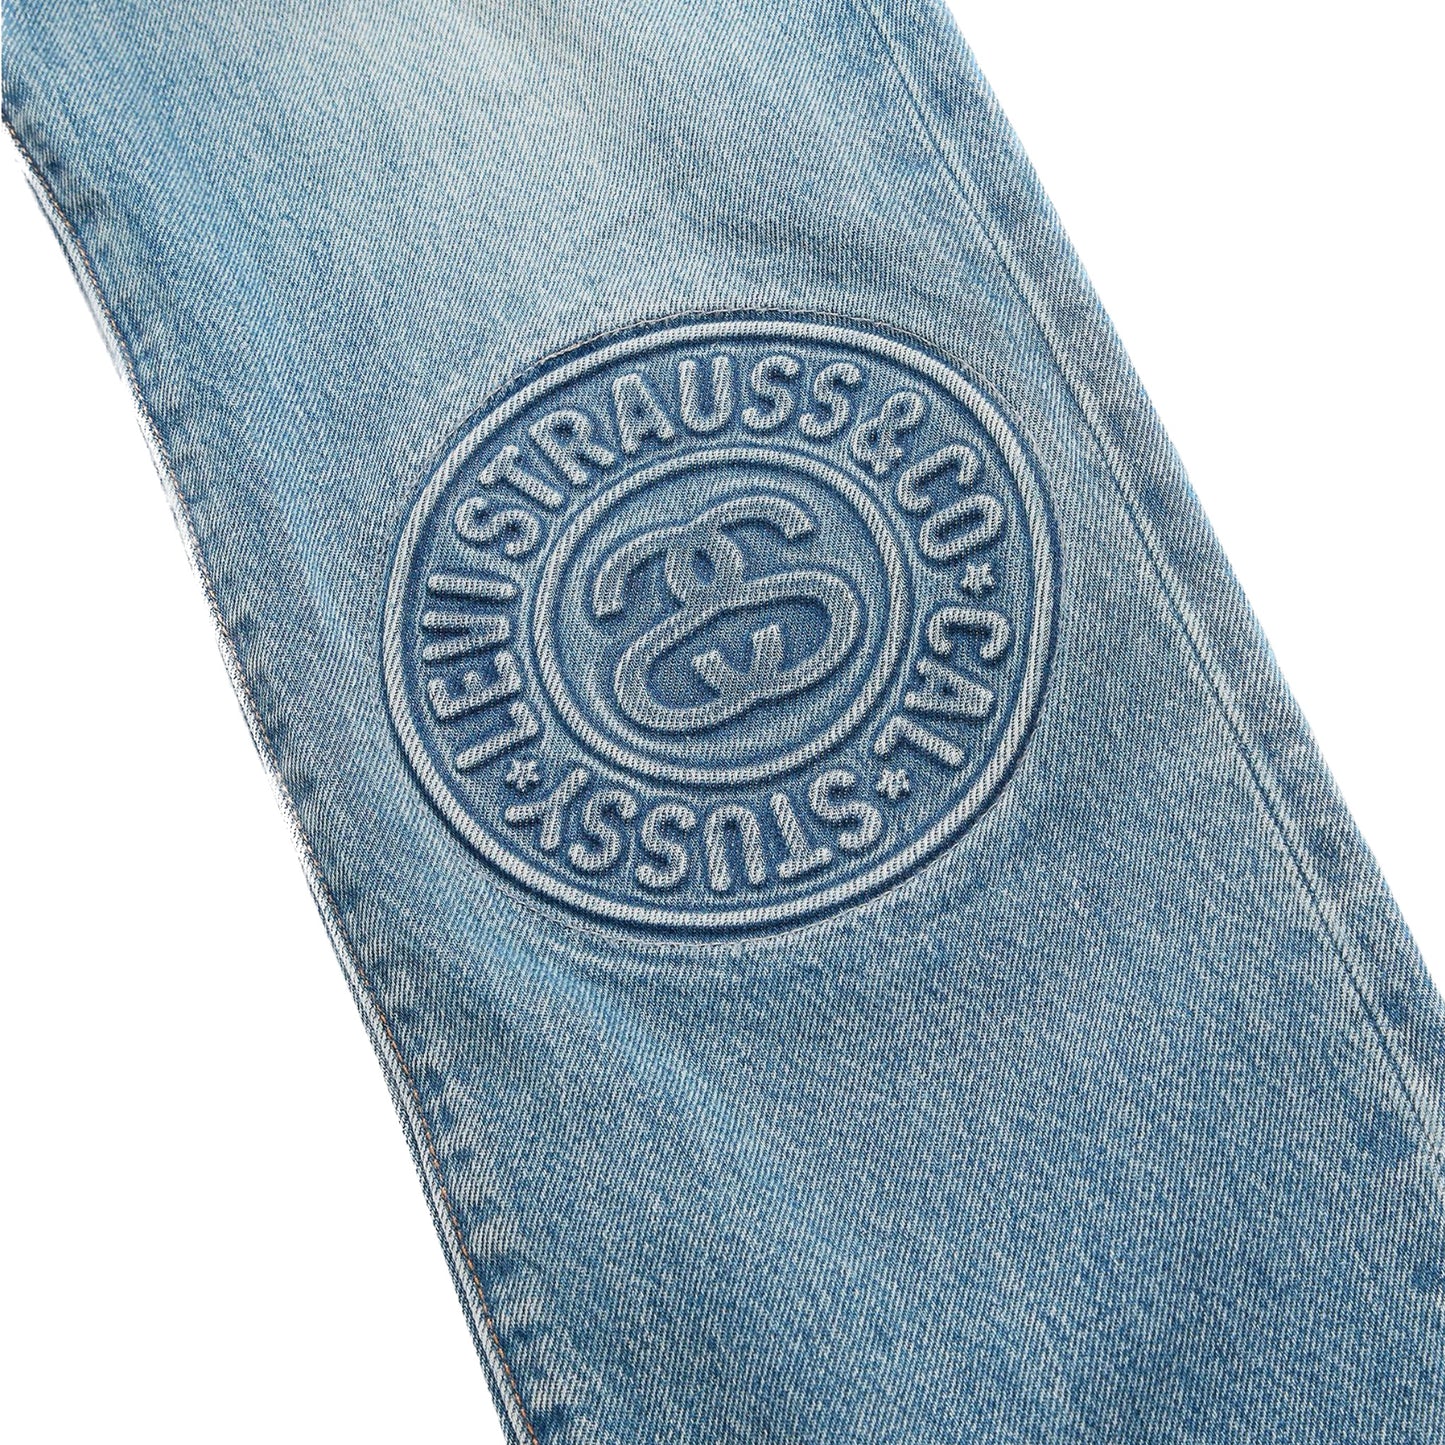 Stussy x Levi's Embossed 501 Jeans Stussy Rugged Blue